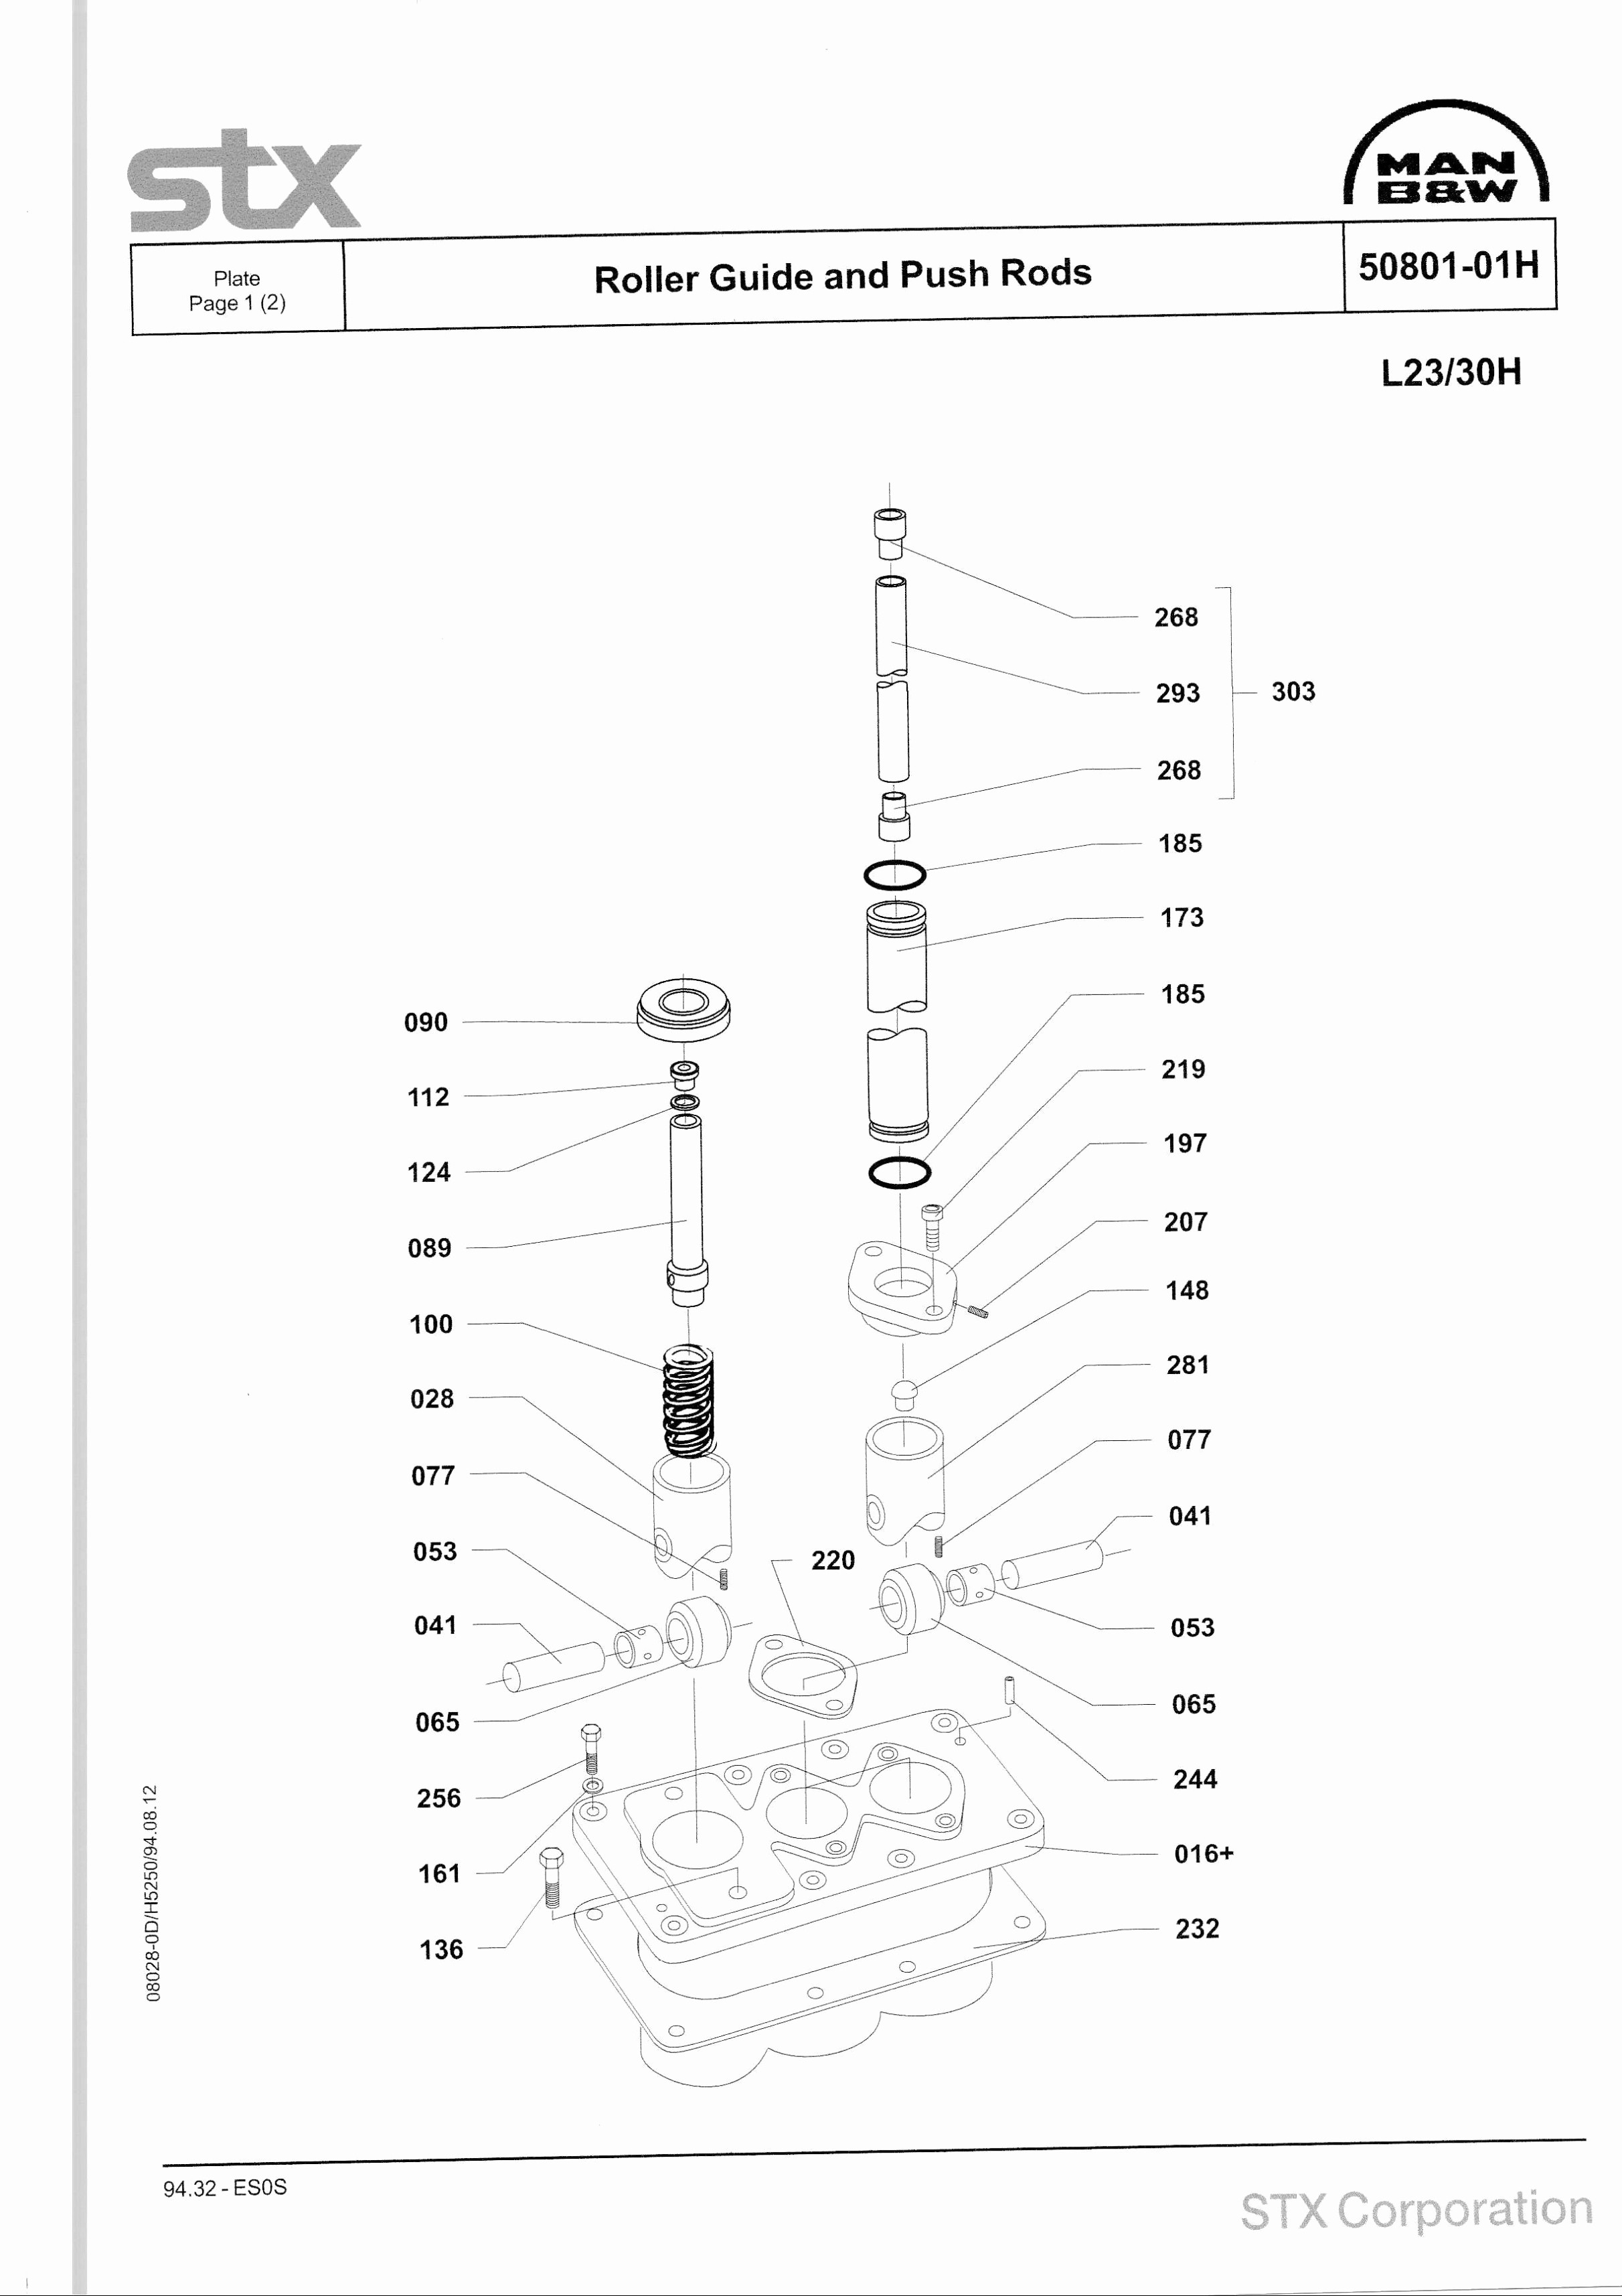 jackson kelly wiring wire data schema u2022 rh nbits co Epiphone Special 2 Wiring Diagram DiMarzio Guitar Pickups Wiring Diagram